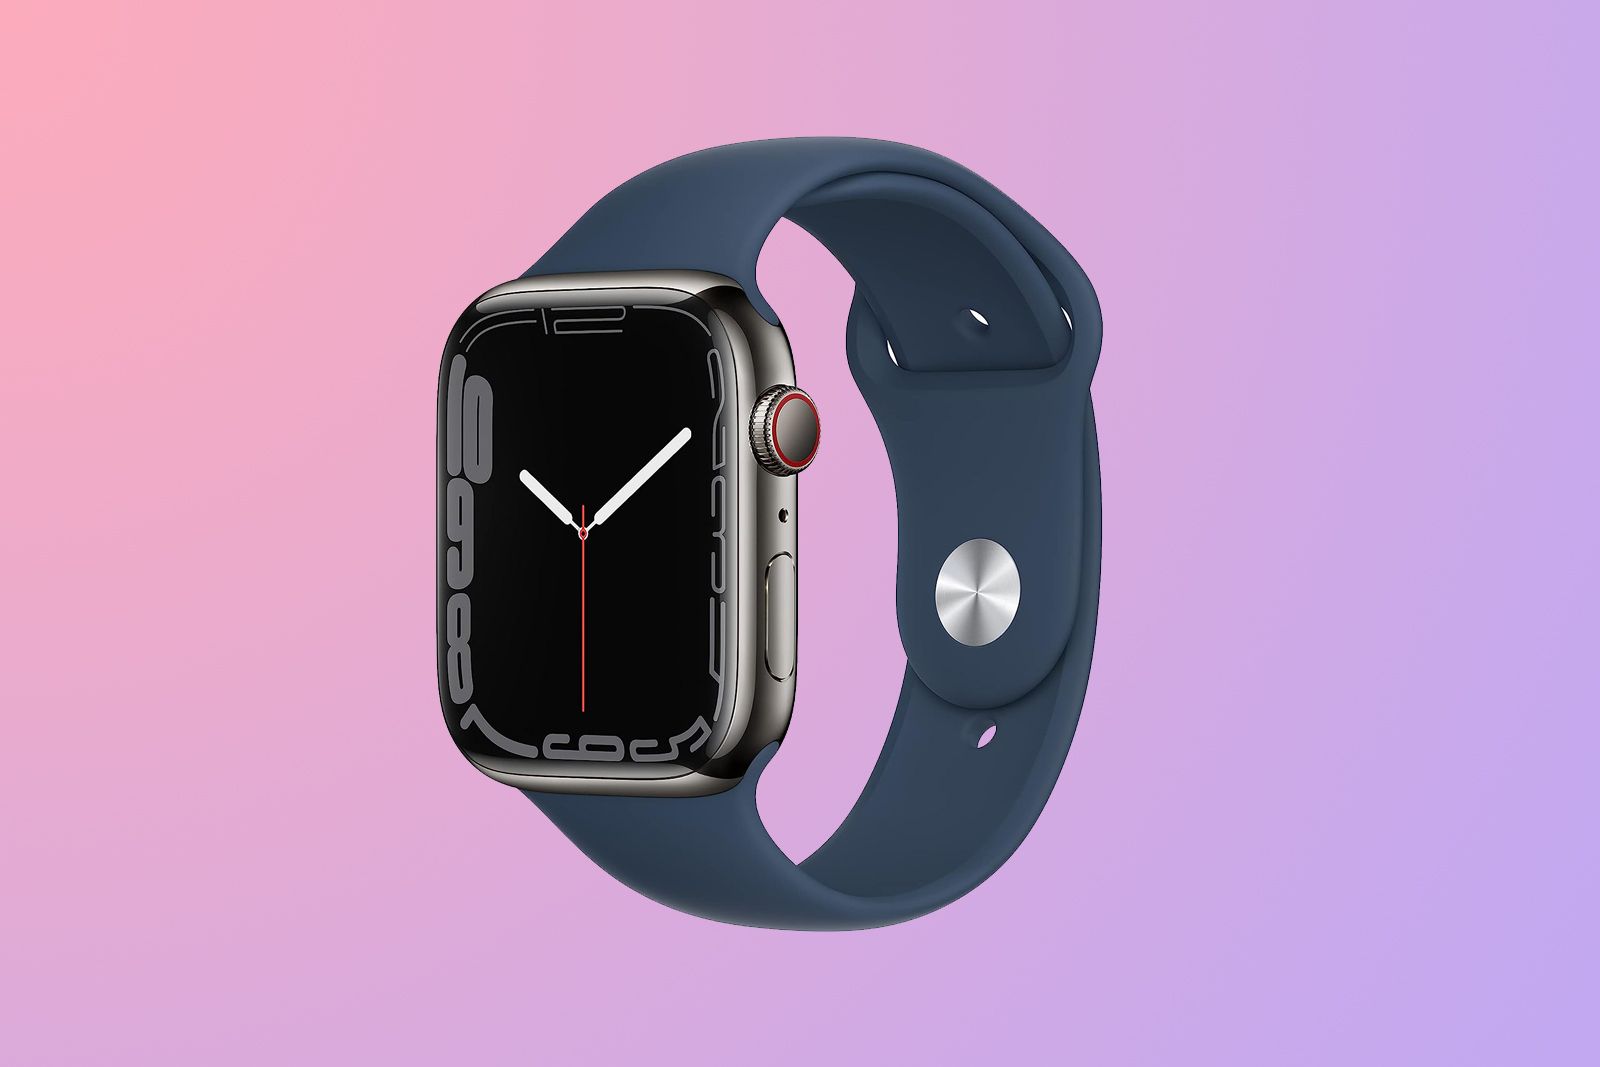 Best early Prime Day Apple Watch deals - Apple Watch Series 7